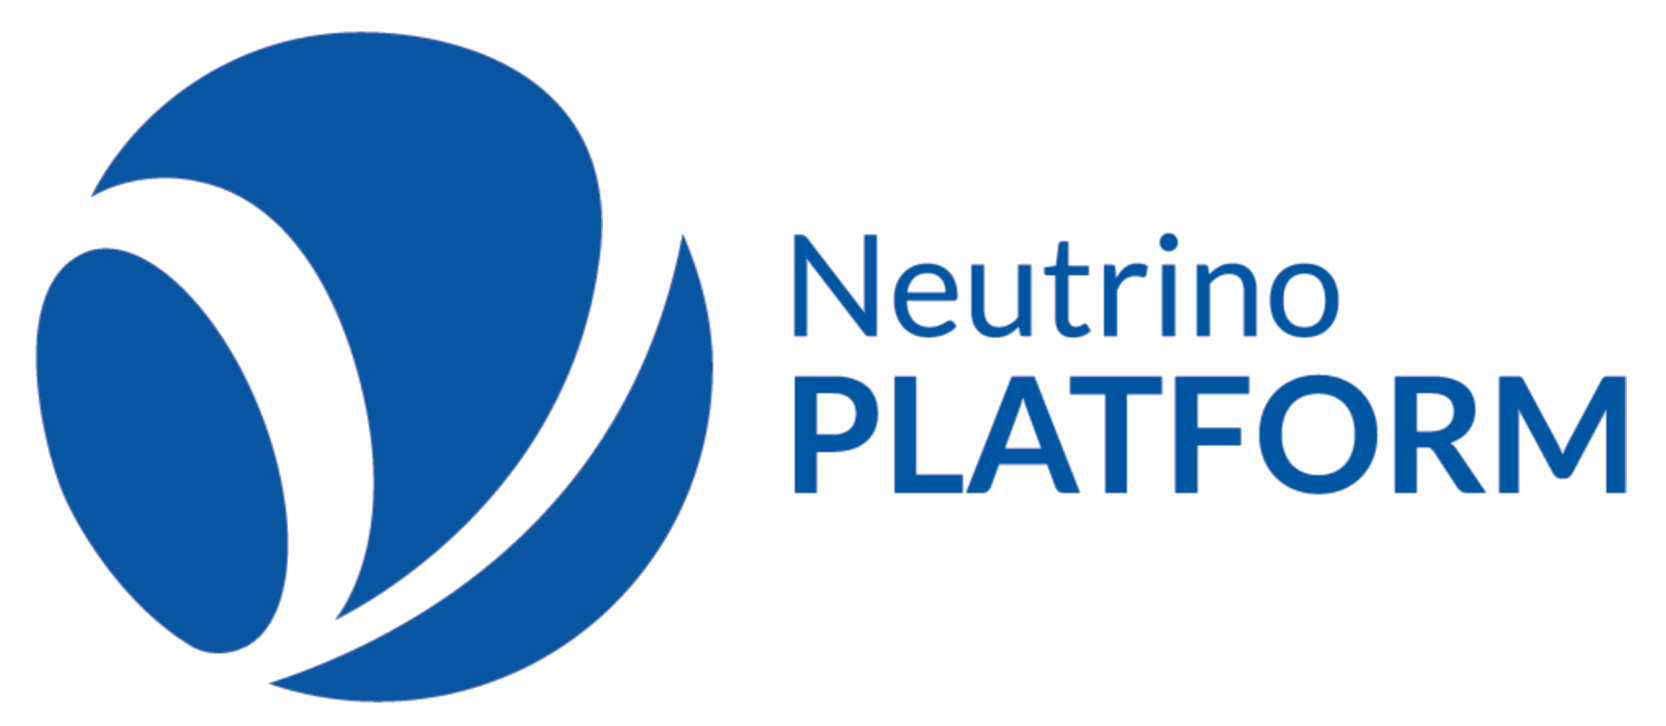 CERN Neutrino Platform Logo